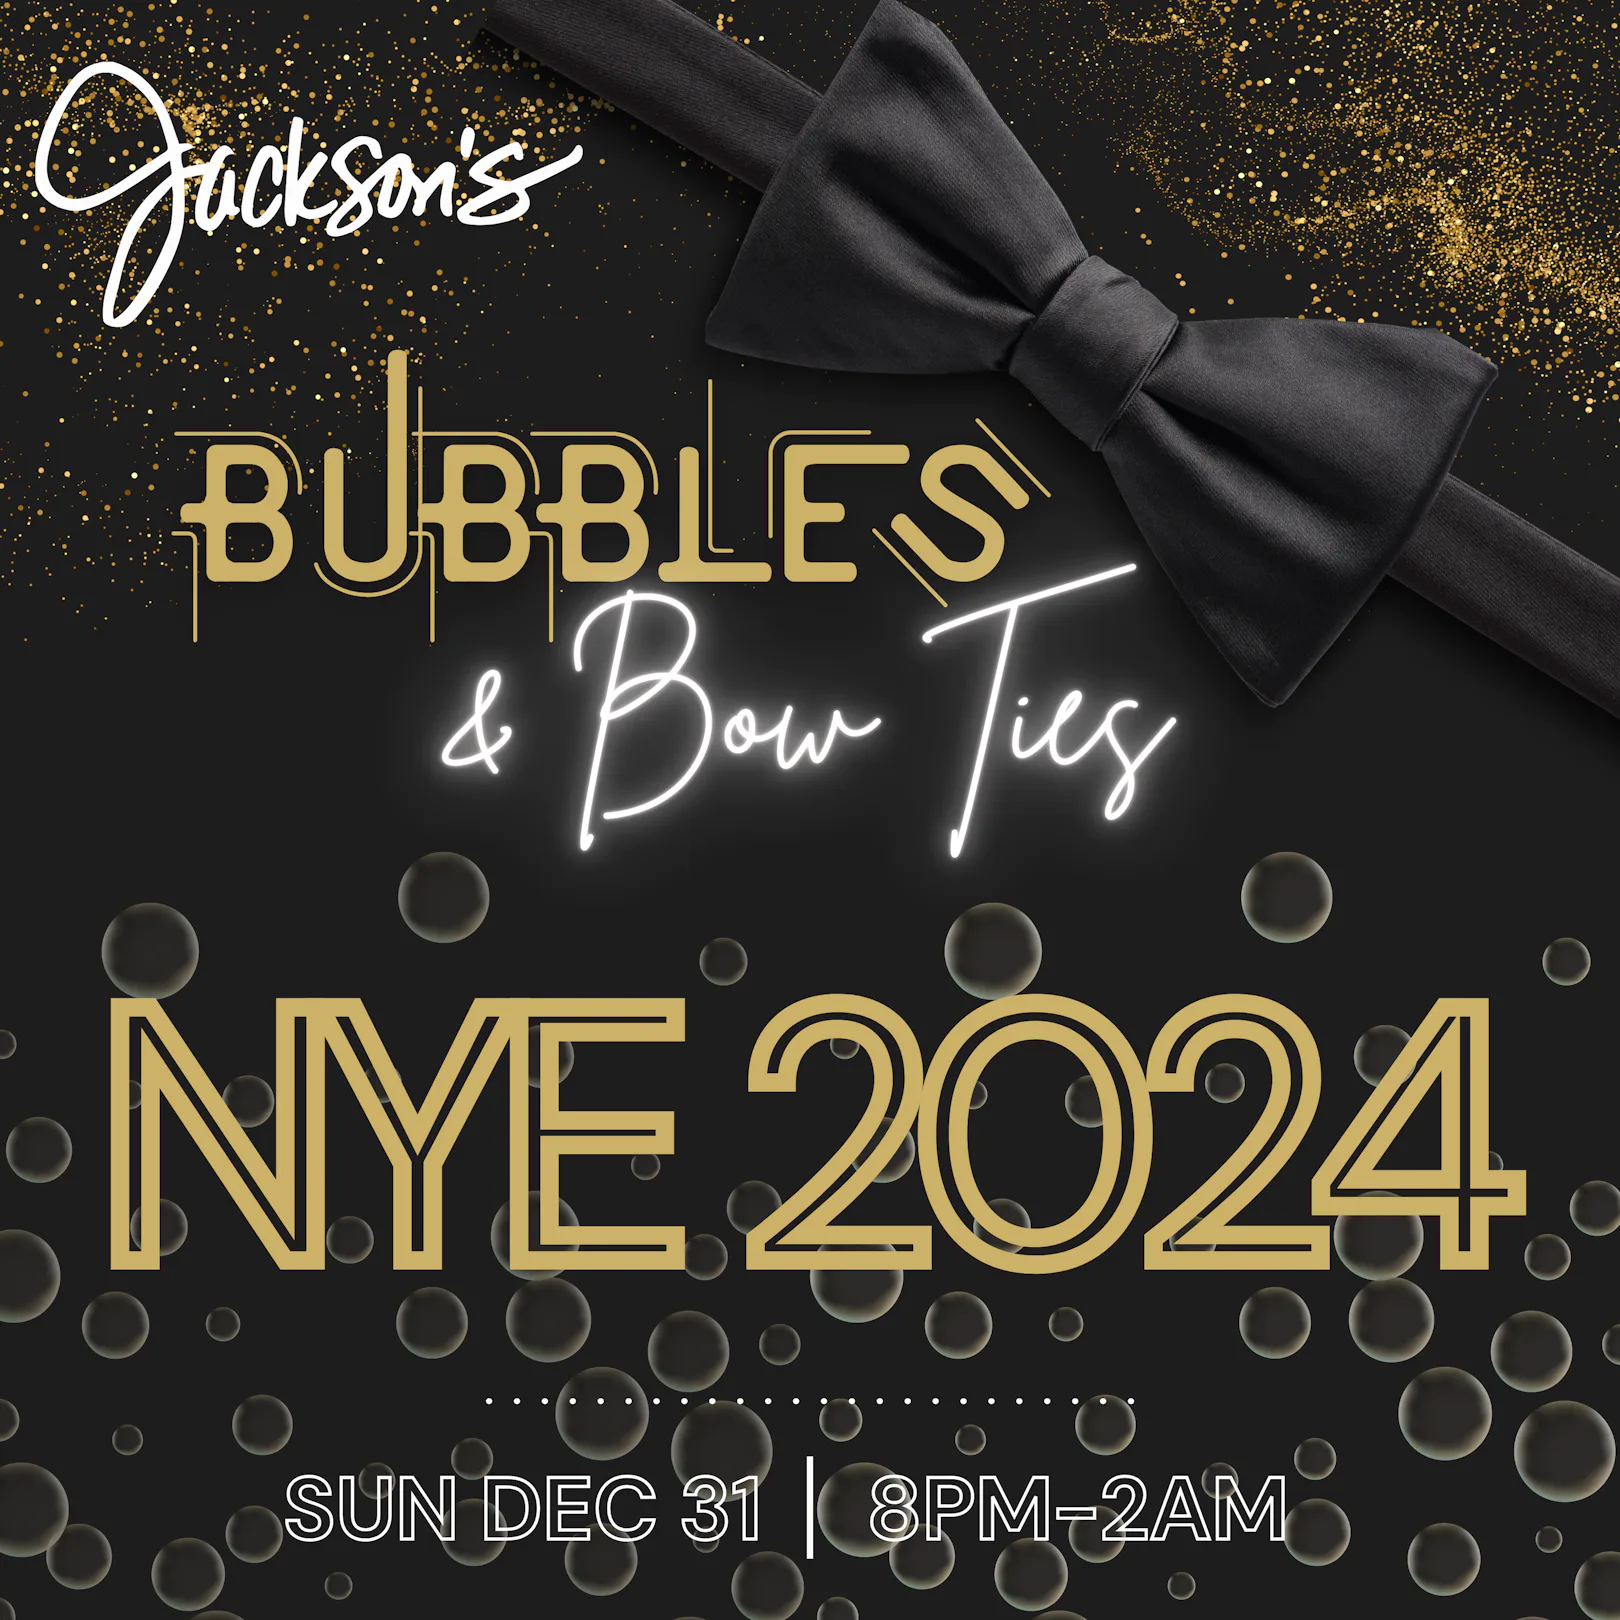 Jackson’s Bubbles & Bow Ties NYE 2024